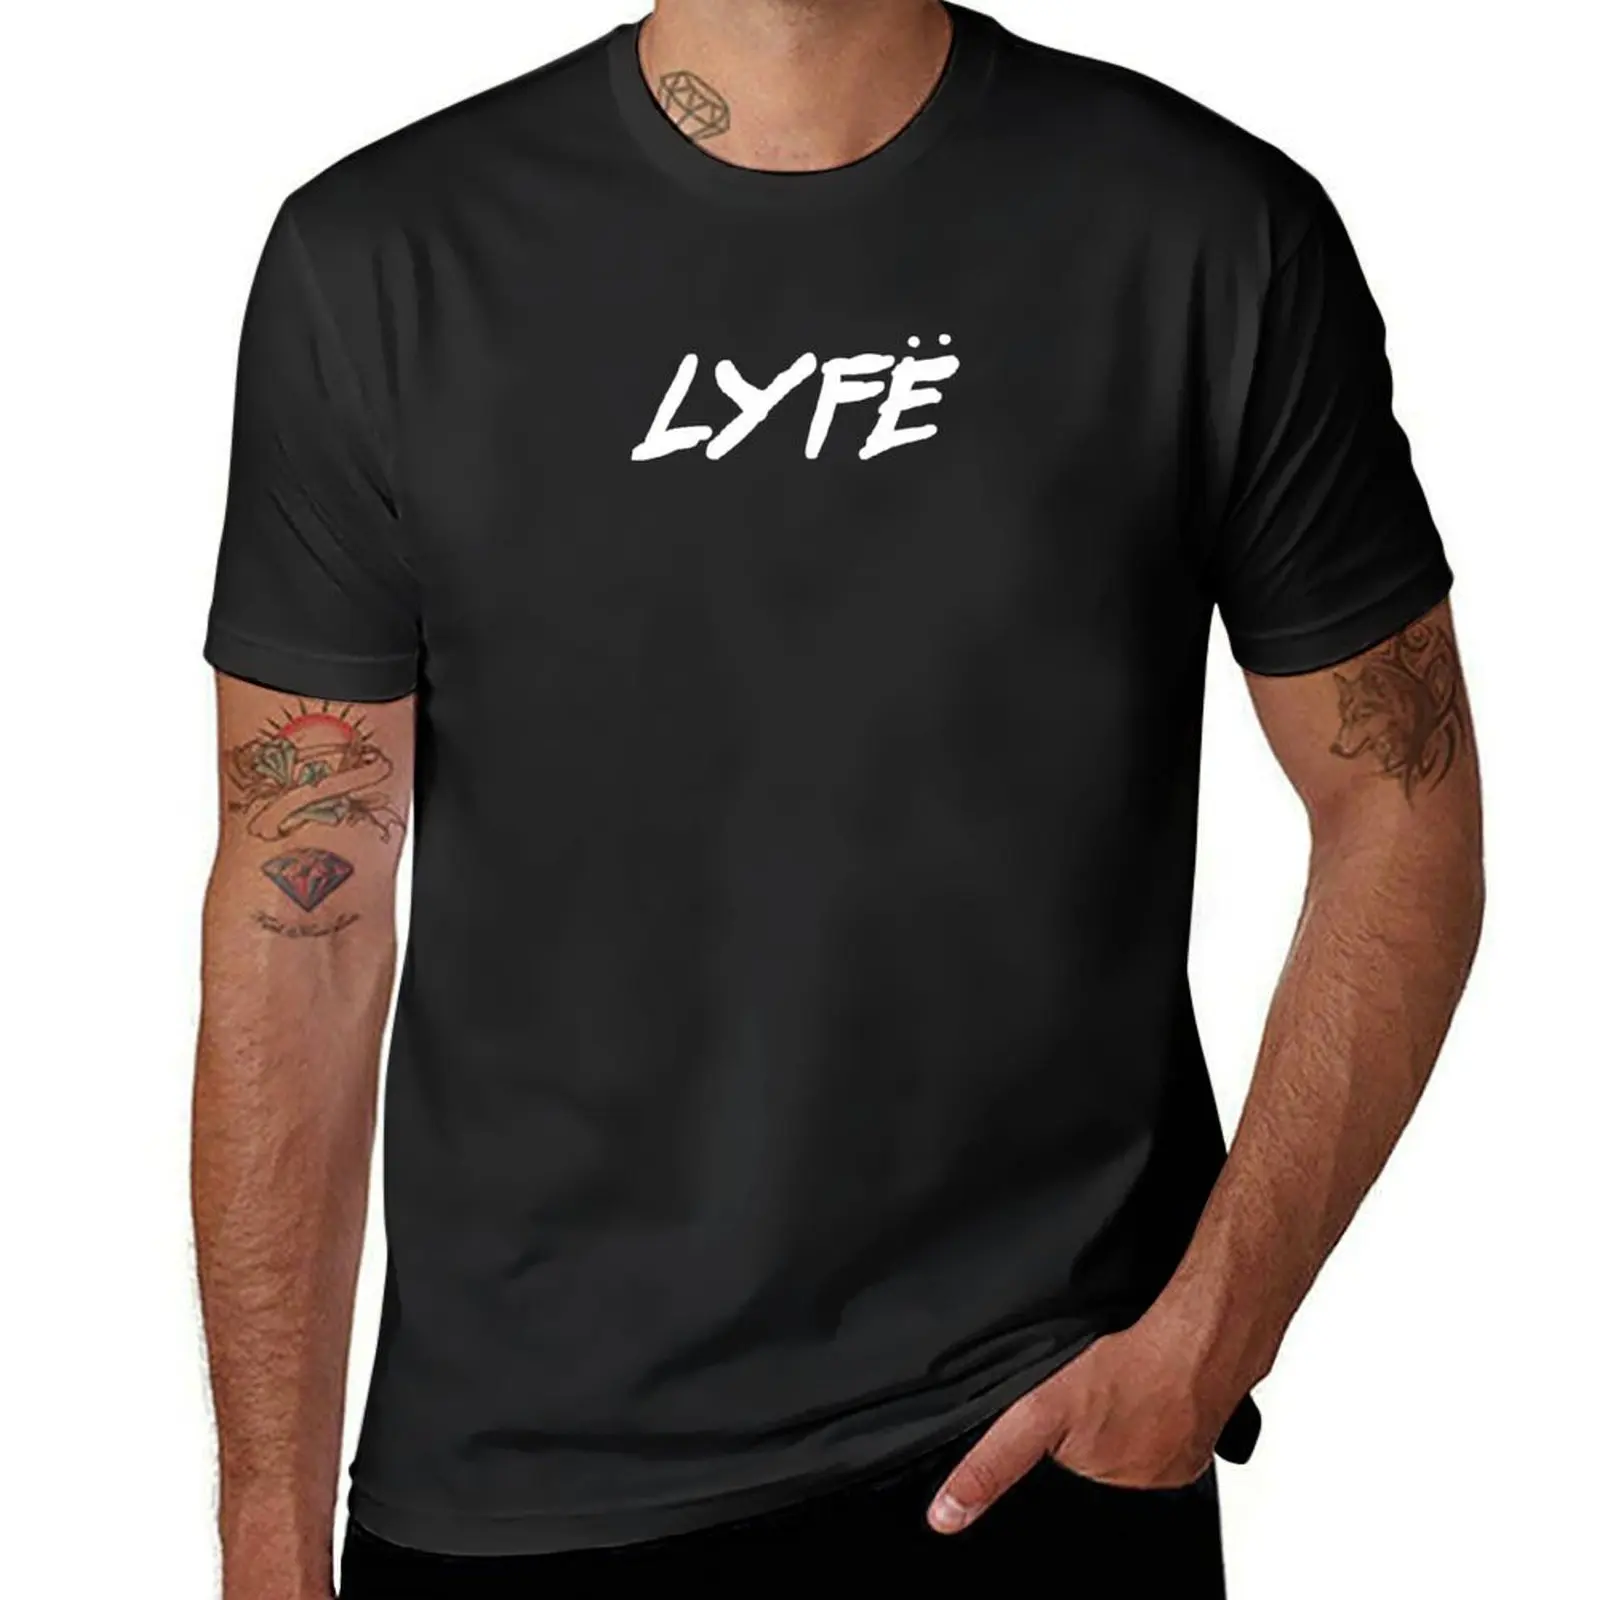 Yeat LYF? Merch T-Shirt blacks Blouse customs design your own sports fans oversized t shirts for men